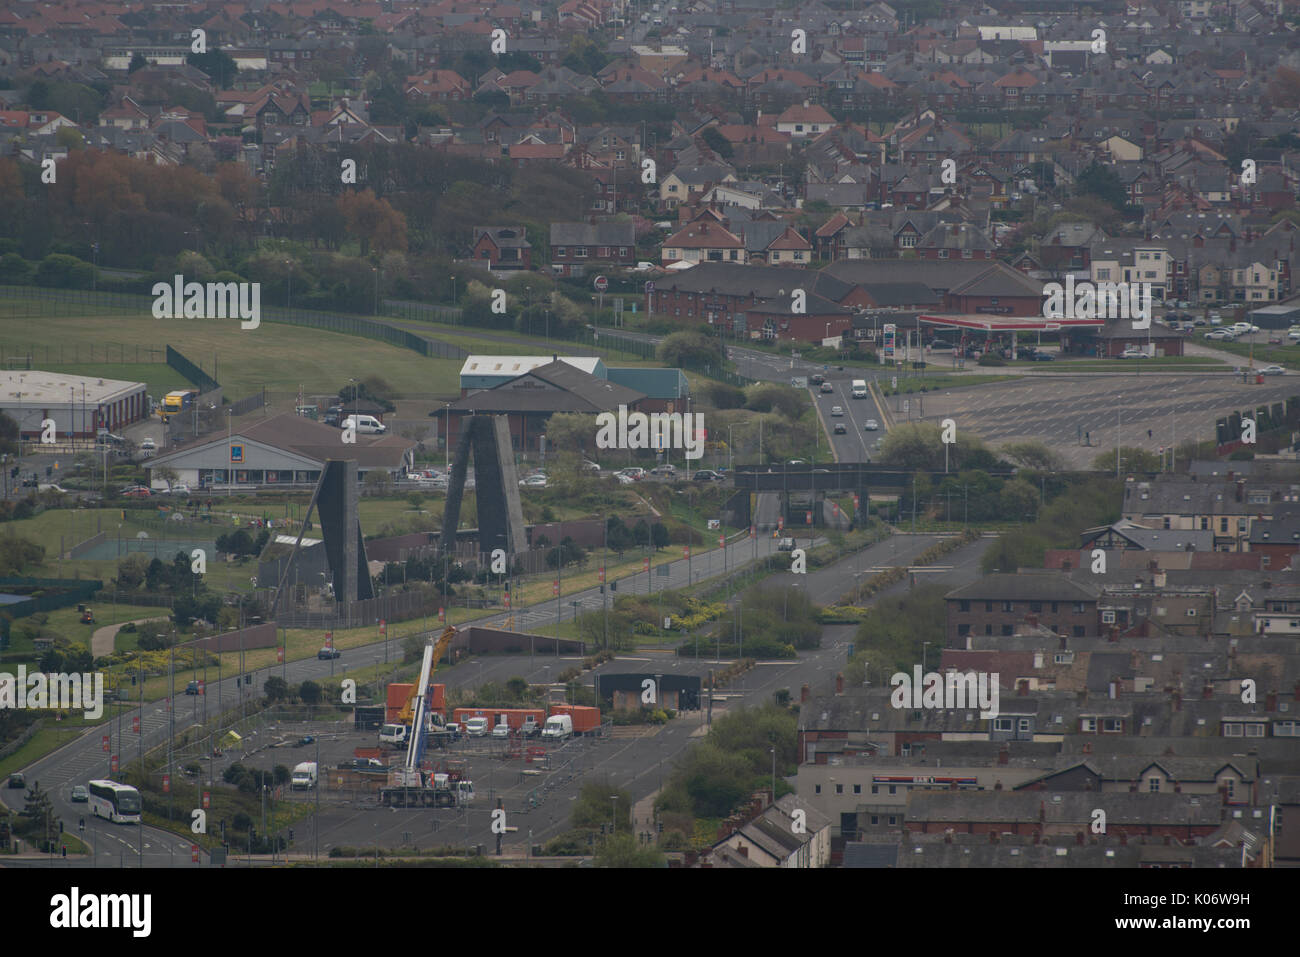 Blackpools, Yeadon way meets Seasiders way. Image taken from height. credit: LEE RAMSDEN / ALAMY Stock Photo